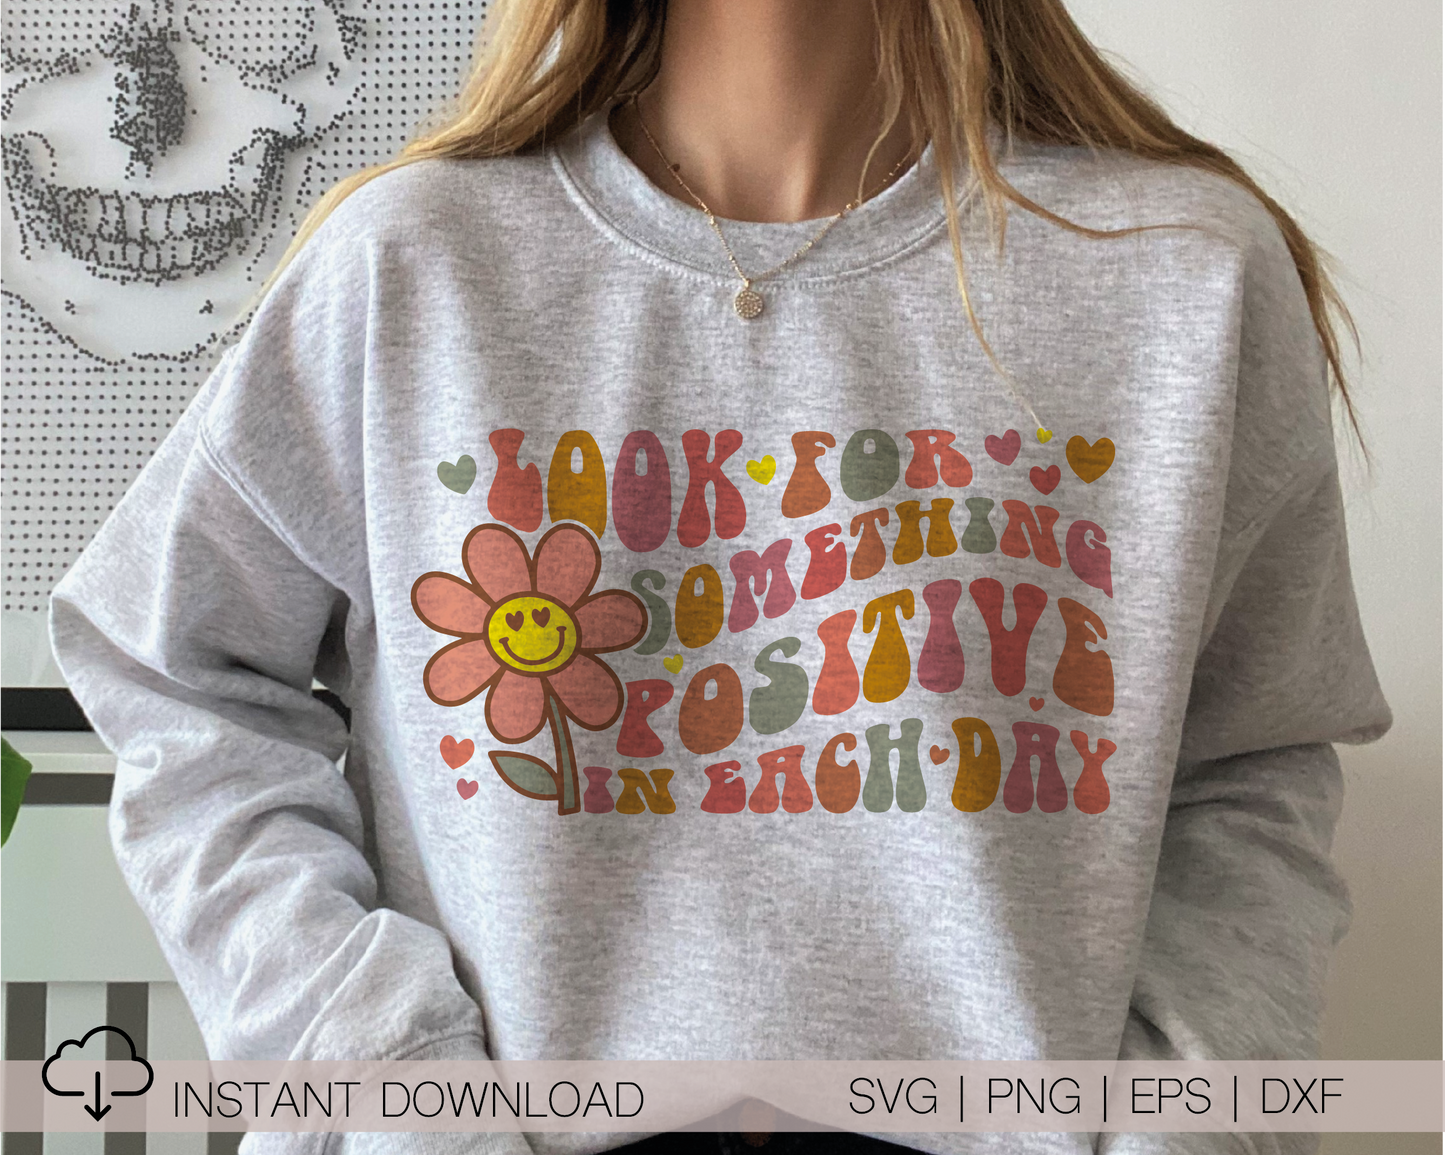 Look For Something Positive In Each Day SVG PNG | Smile Flower Sublimation | Inspirational | Retro Vintage T shirt Design